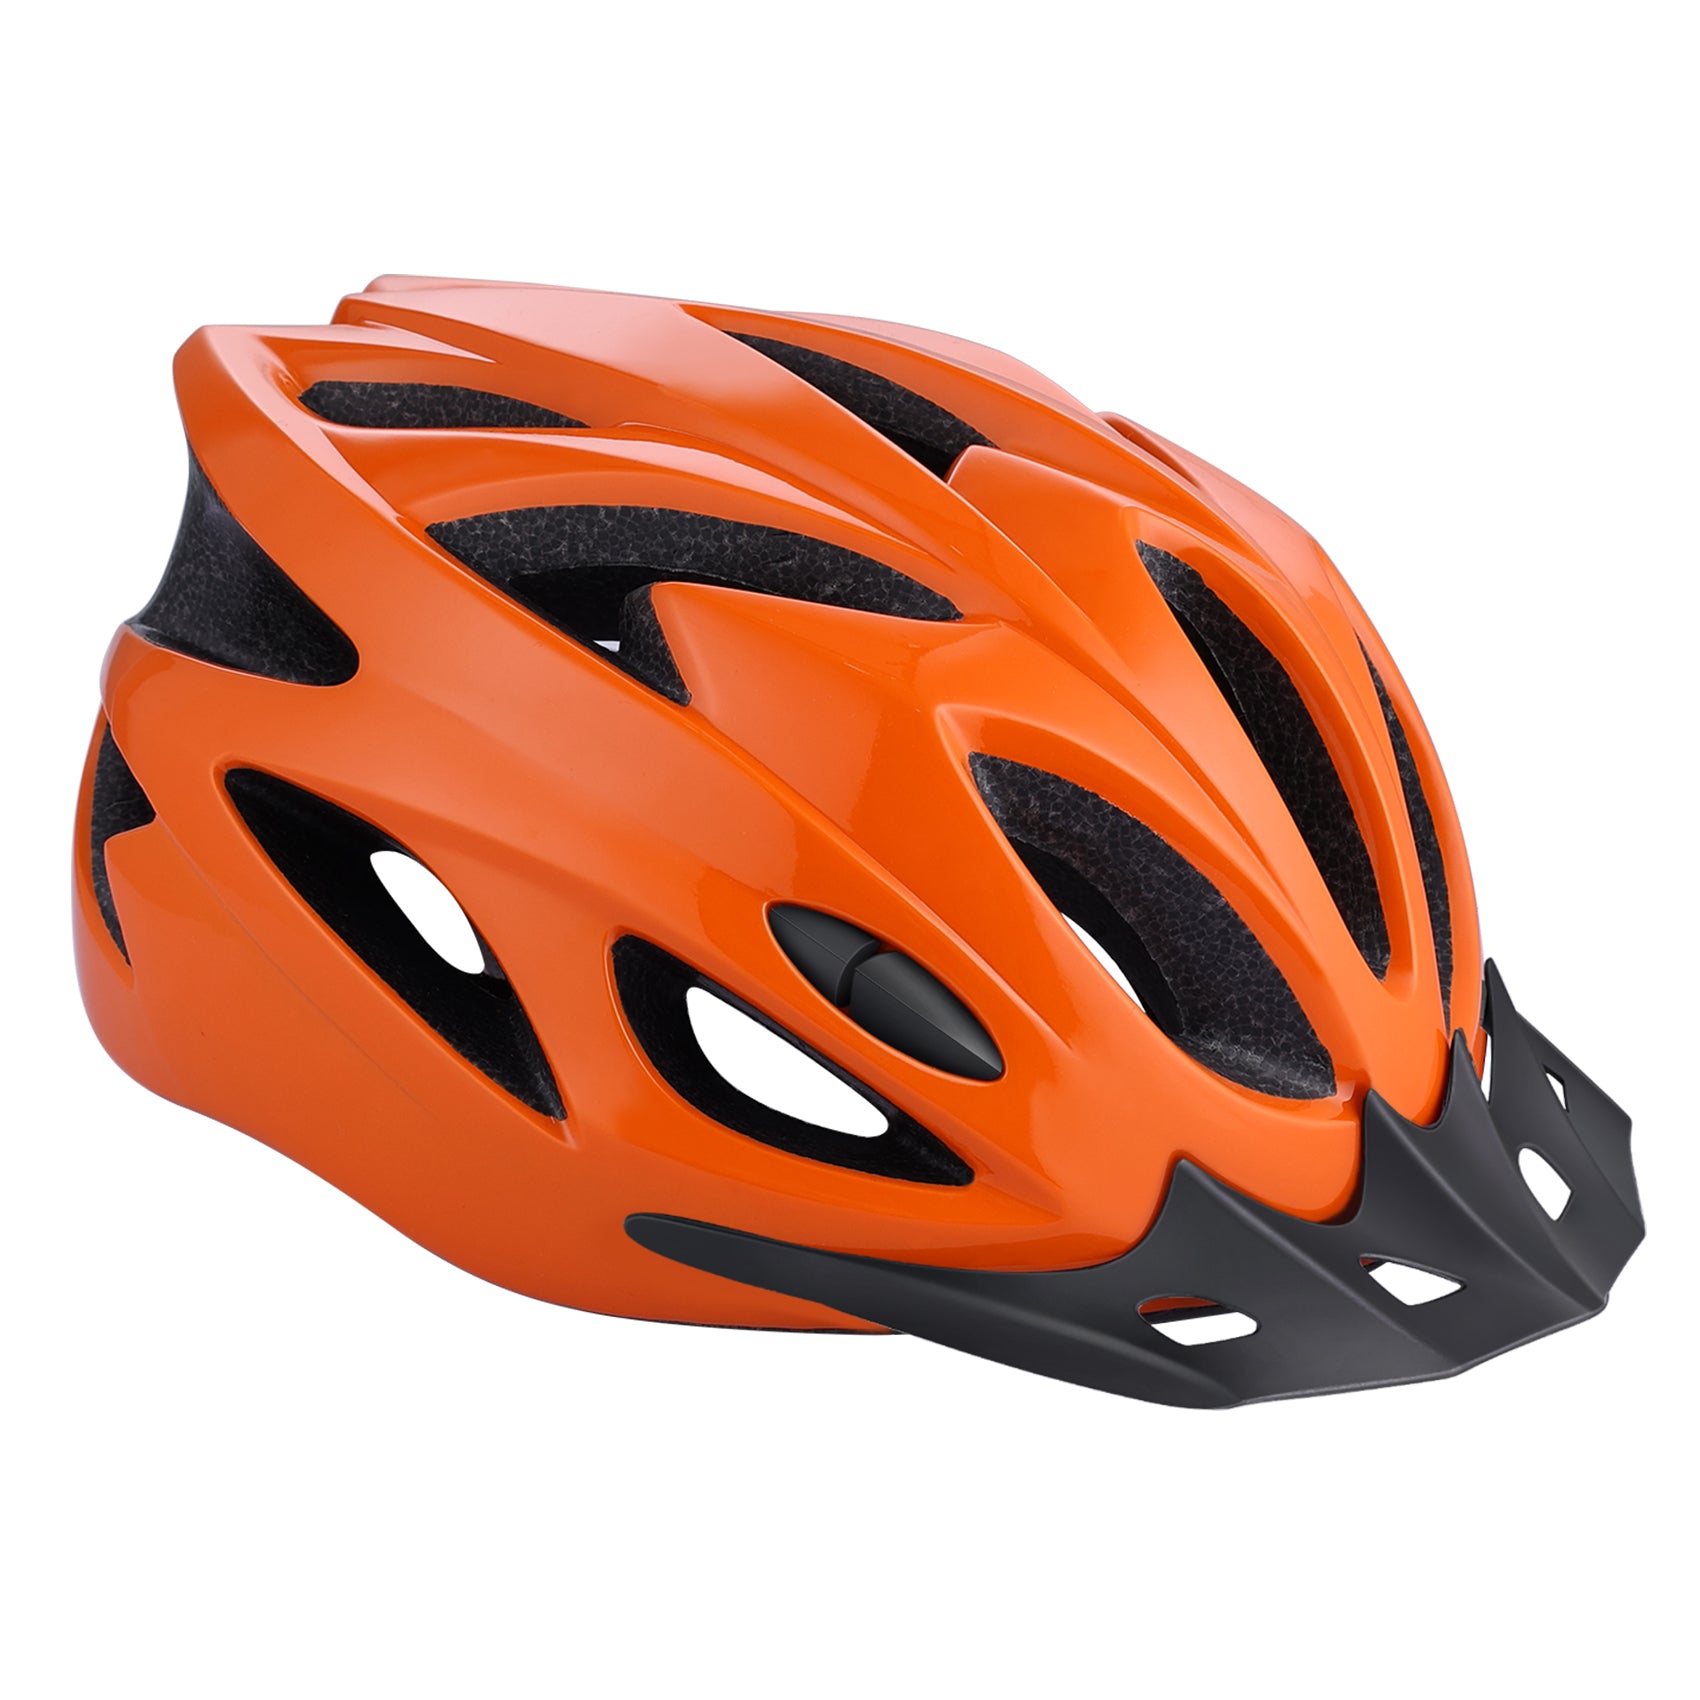 Adult Bike Helmet Lightweight